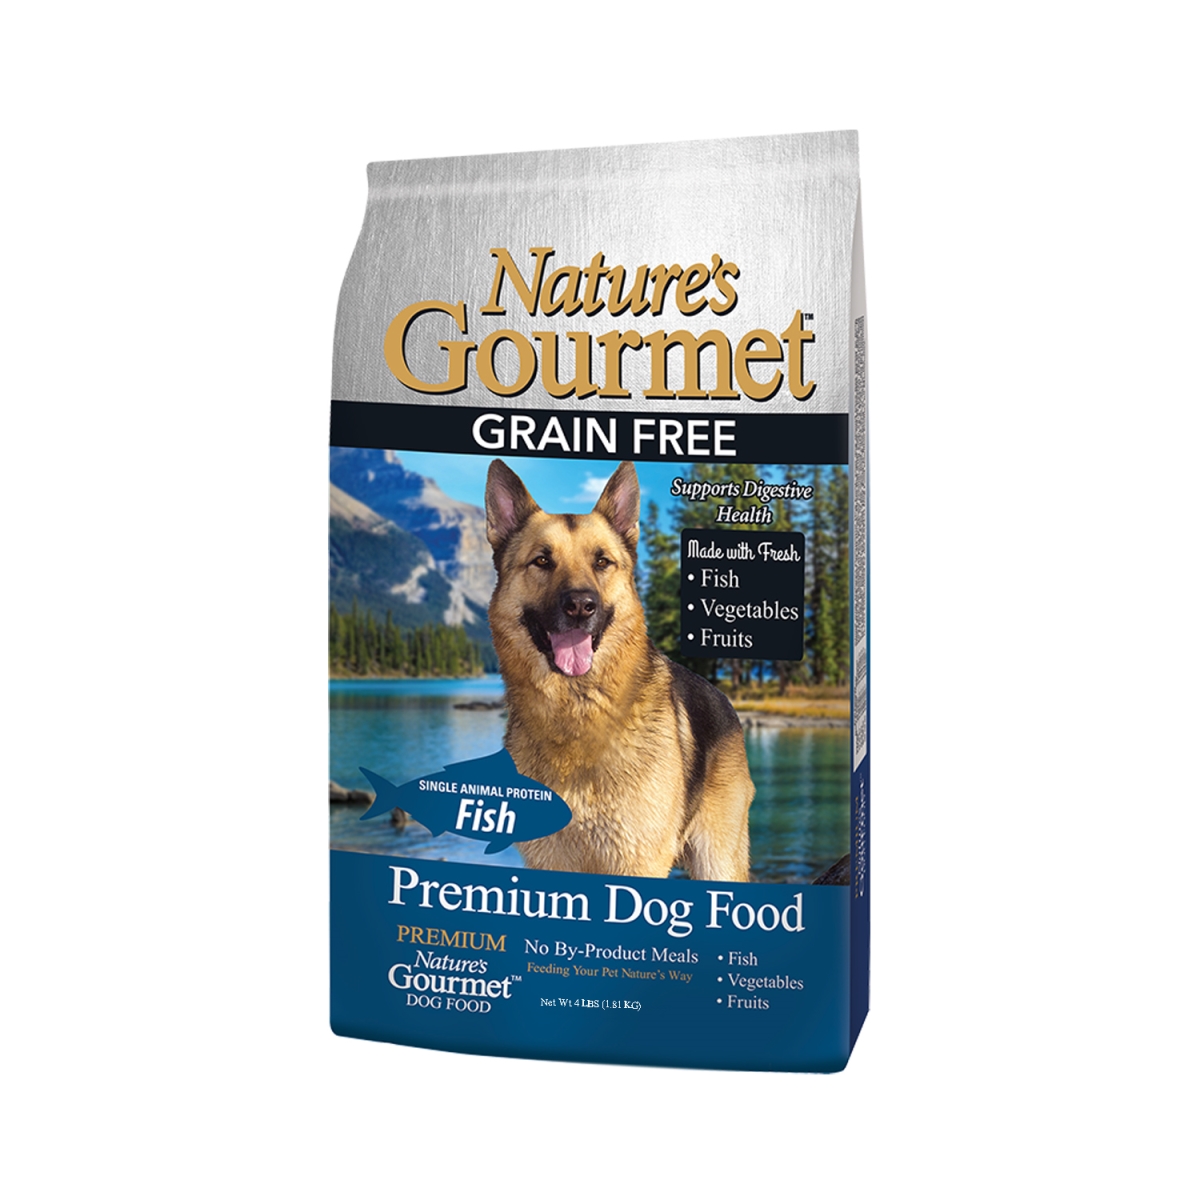 Ngdg-af0400-01 4 Lbs Grain-free Adult Dog Food, White Fish